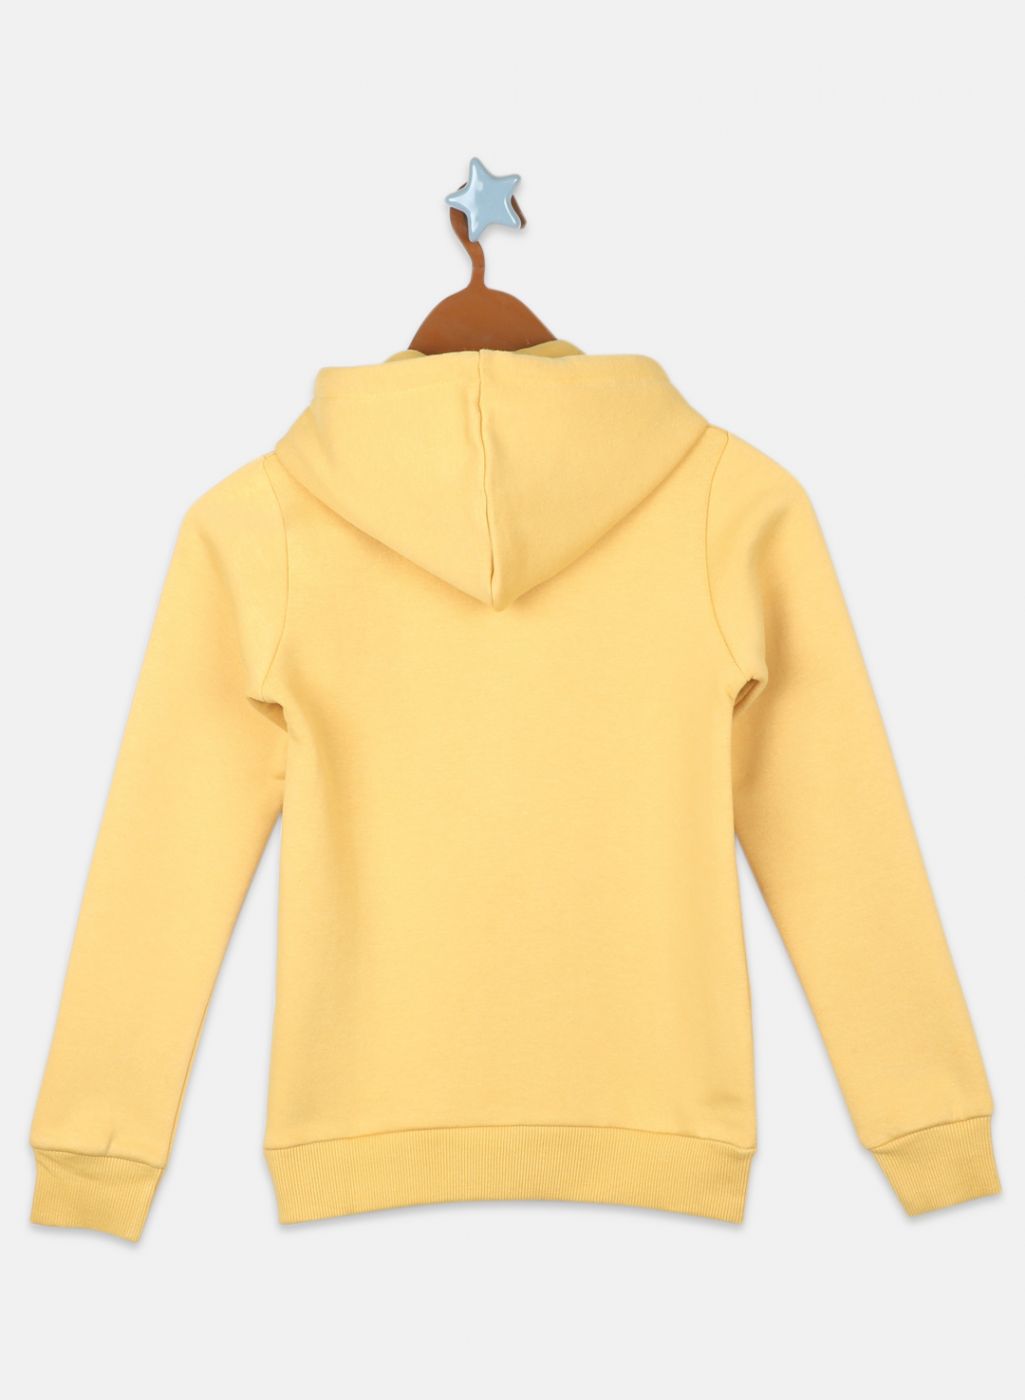 Girls Mustard Printed Sweatshirt